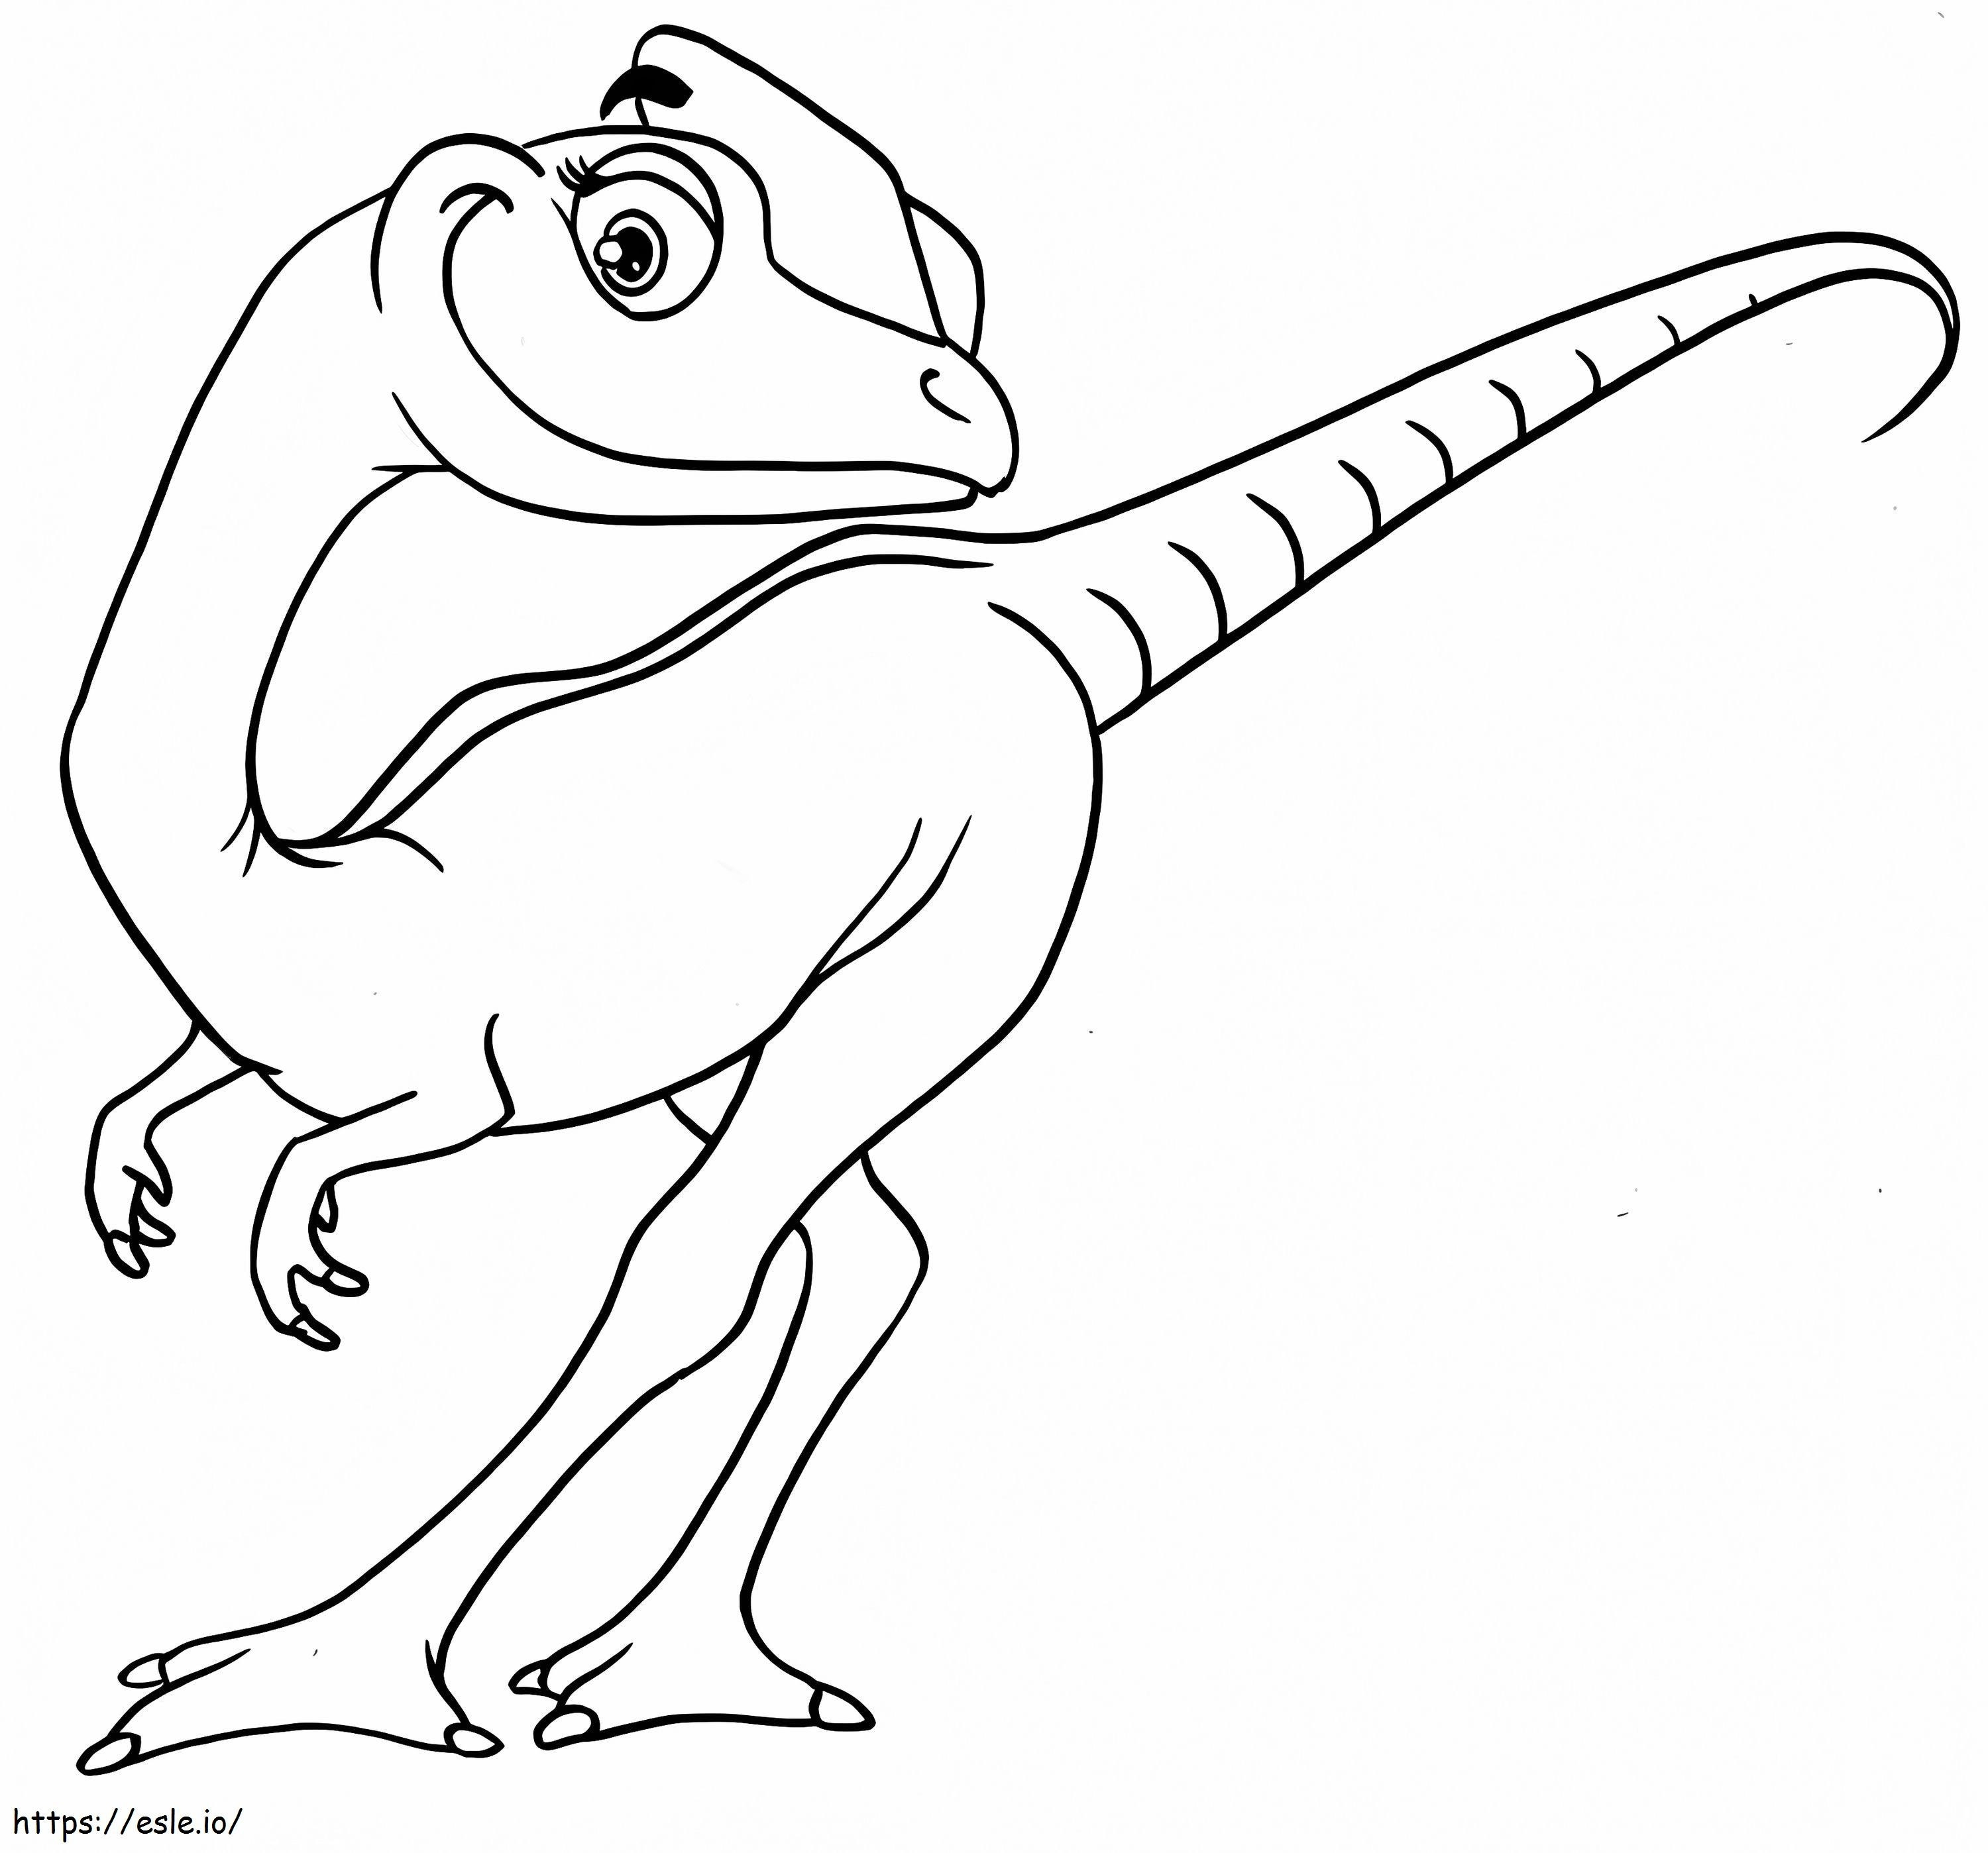 Cartoon Dilophosaurus coloring page